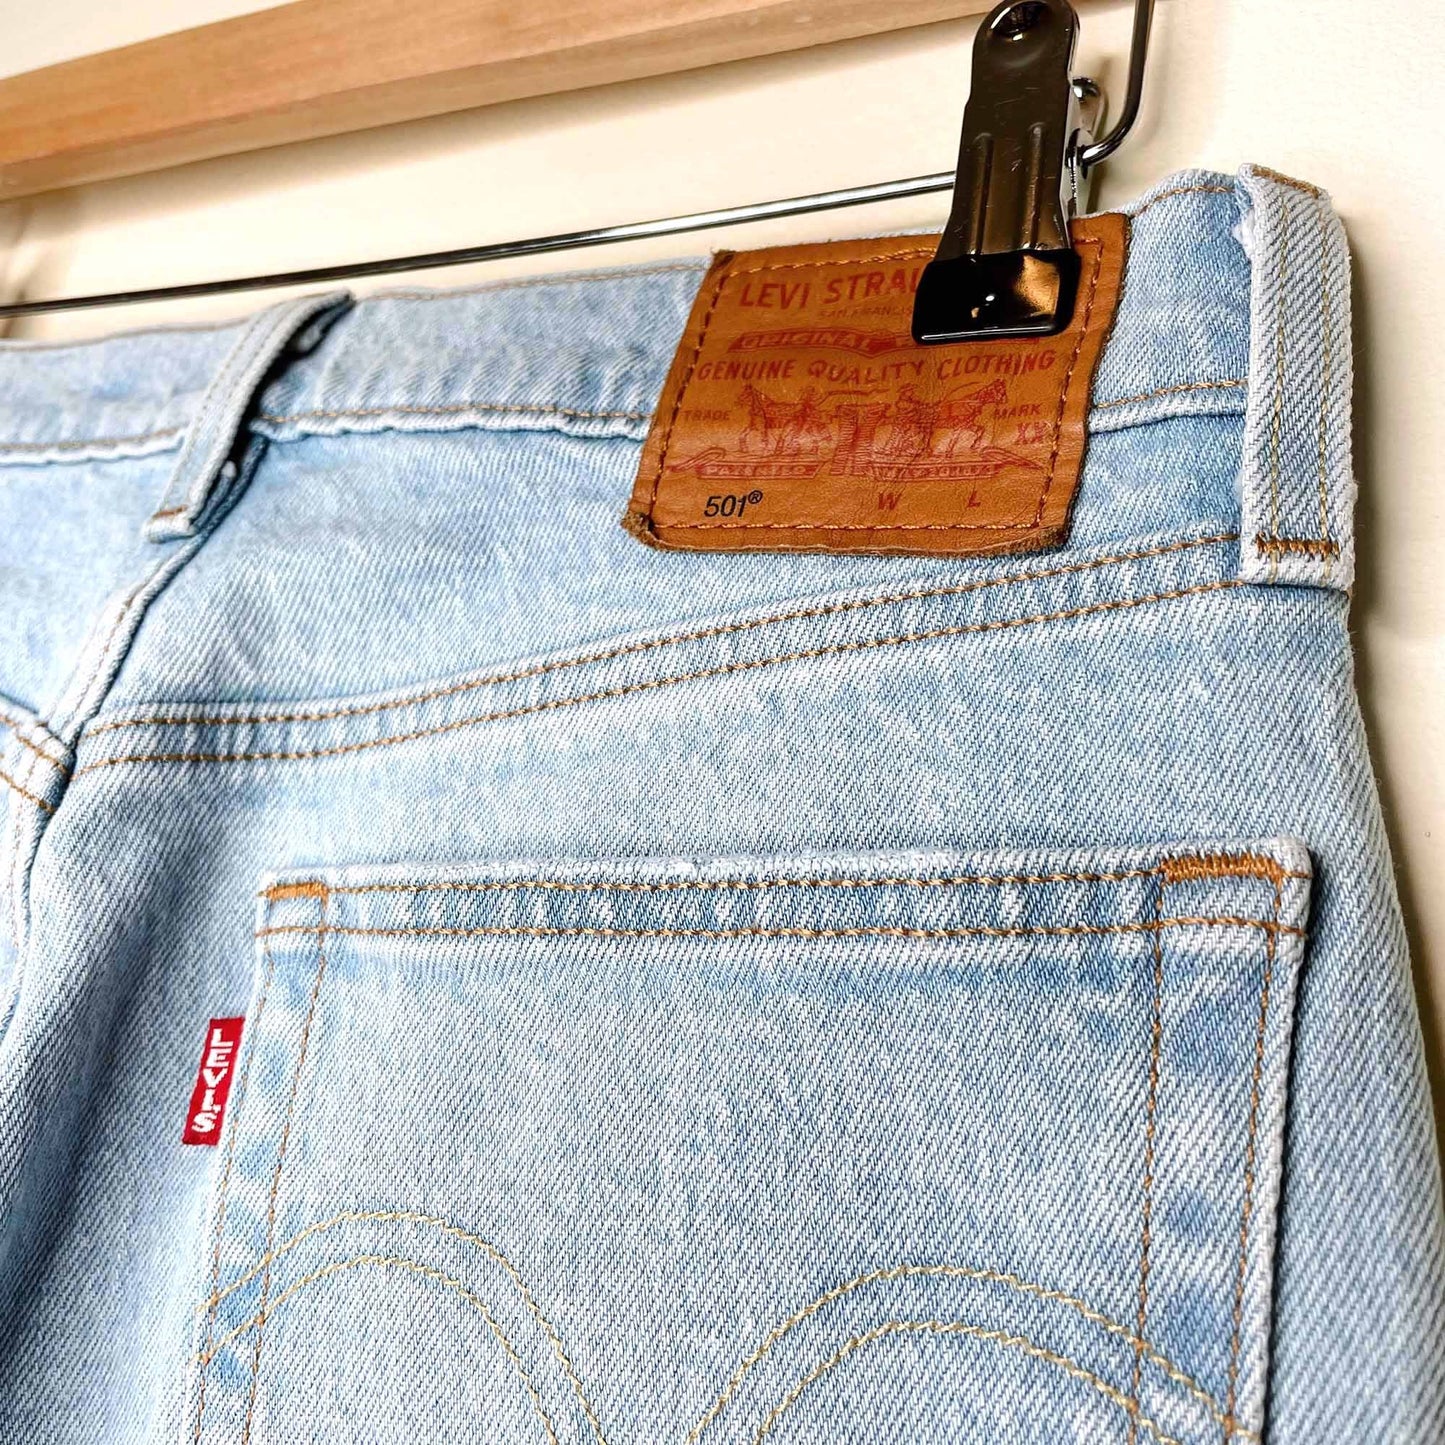 levi's 501 button fly crop spectator sport jeans - size 27